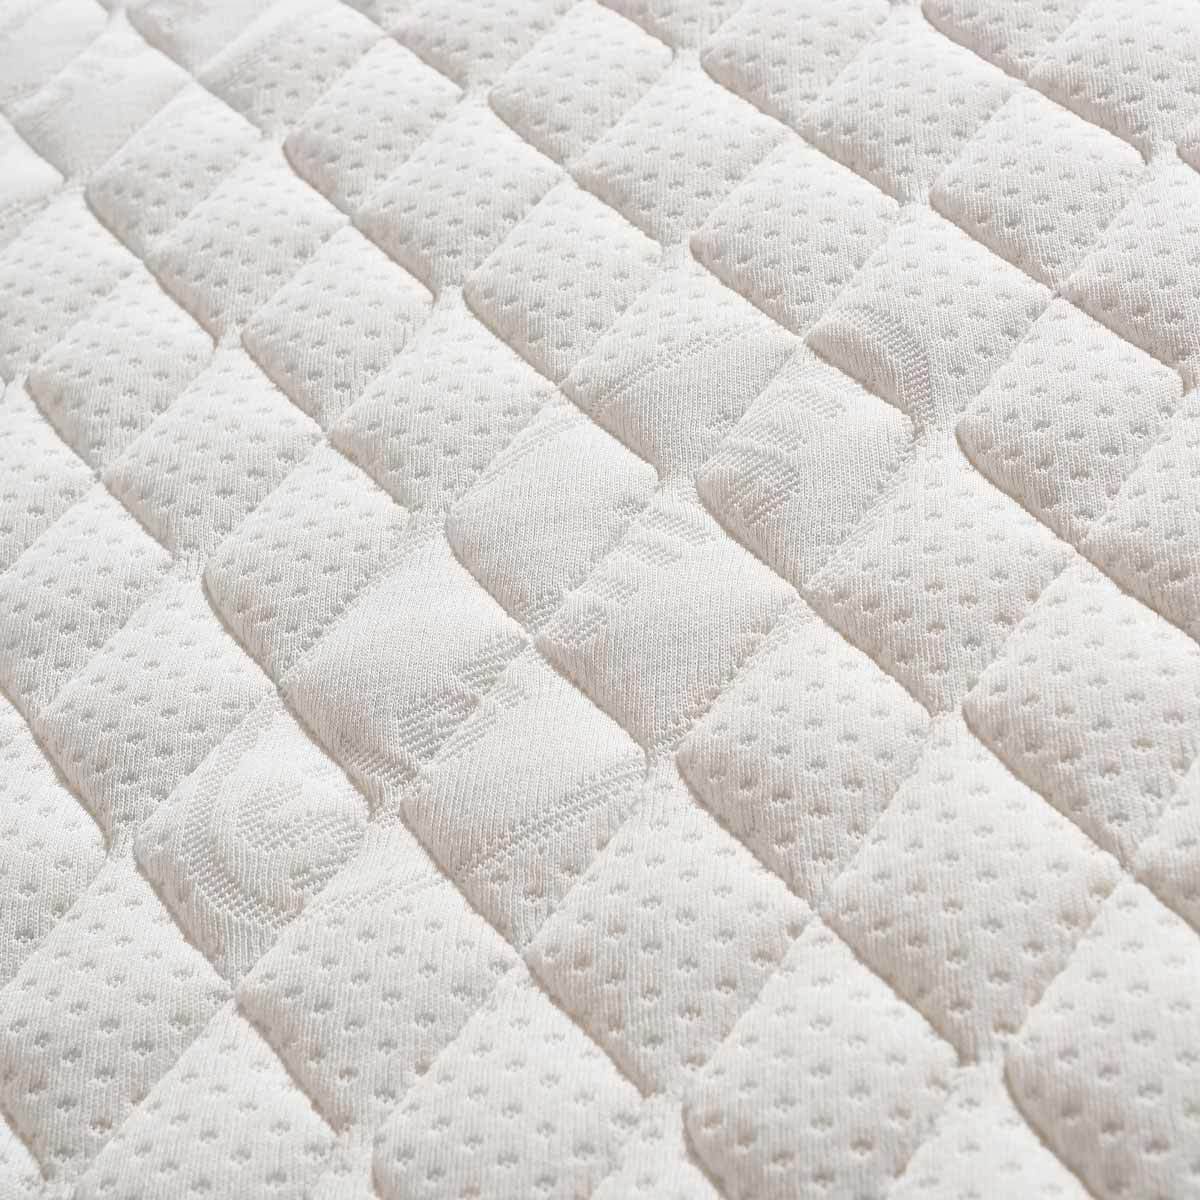 Close up detail of silentnight logo on mattress cover